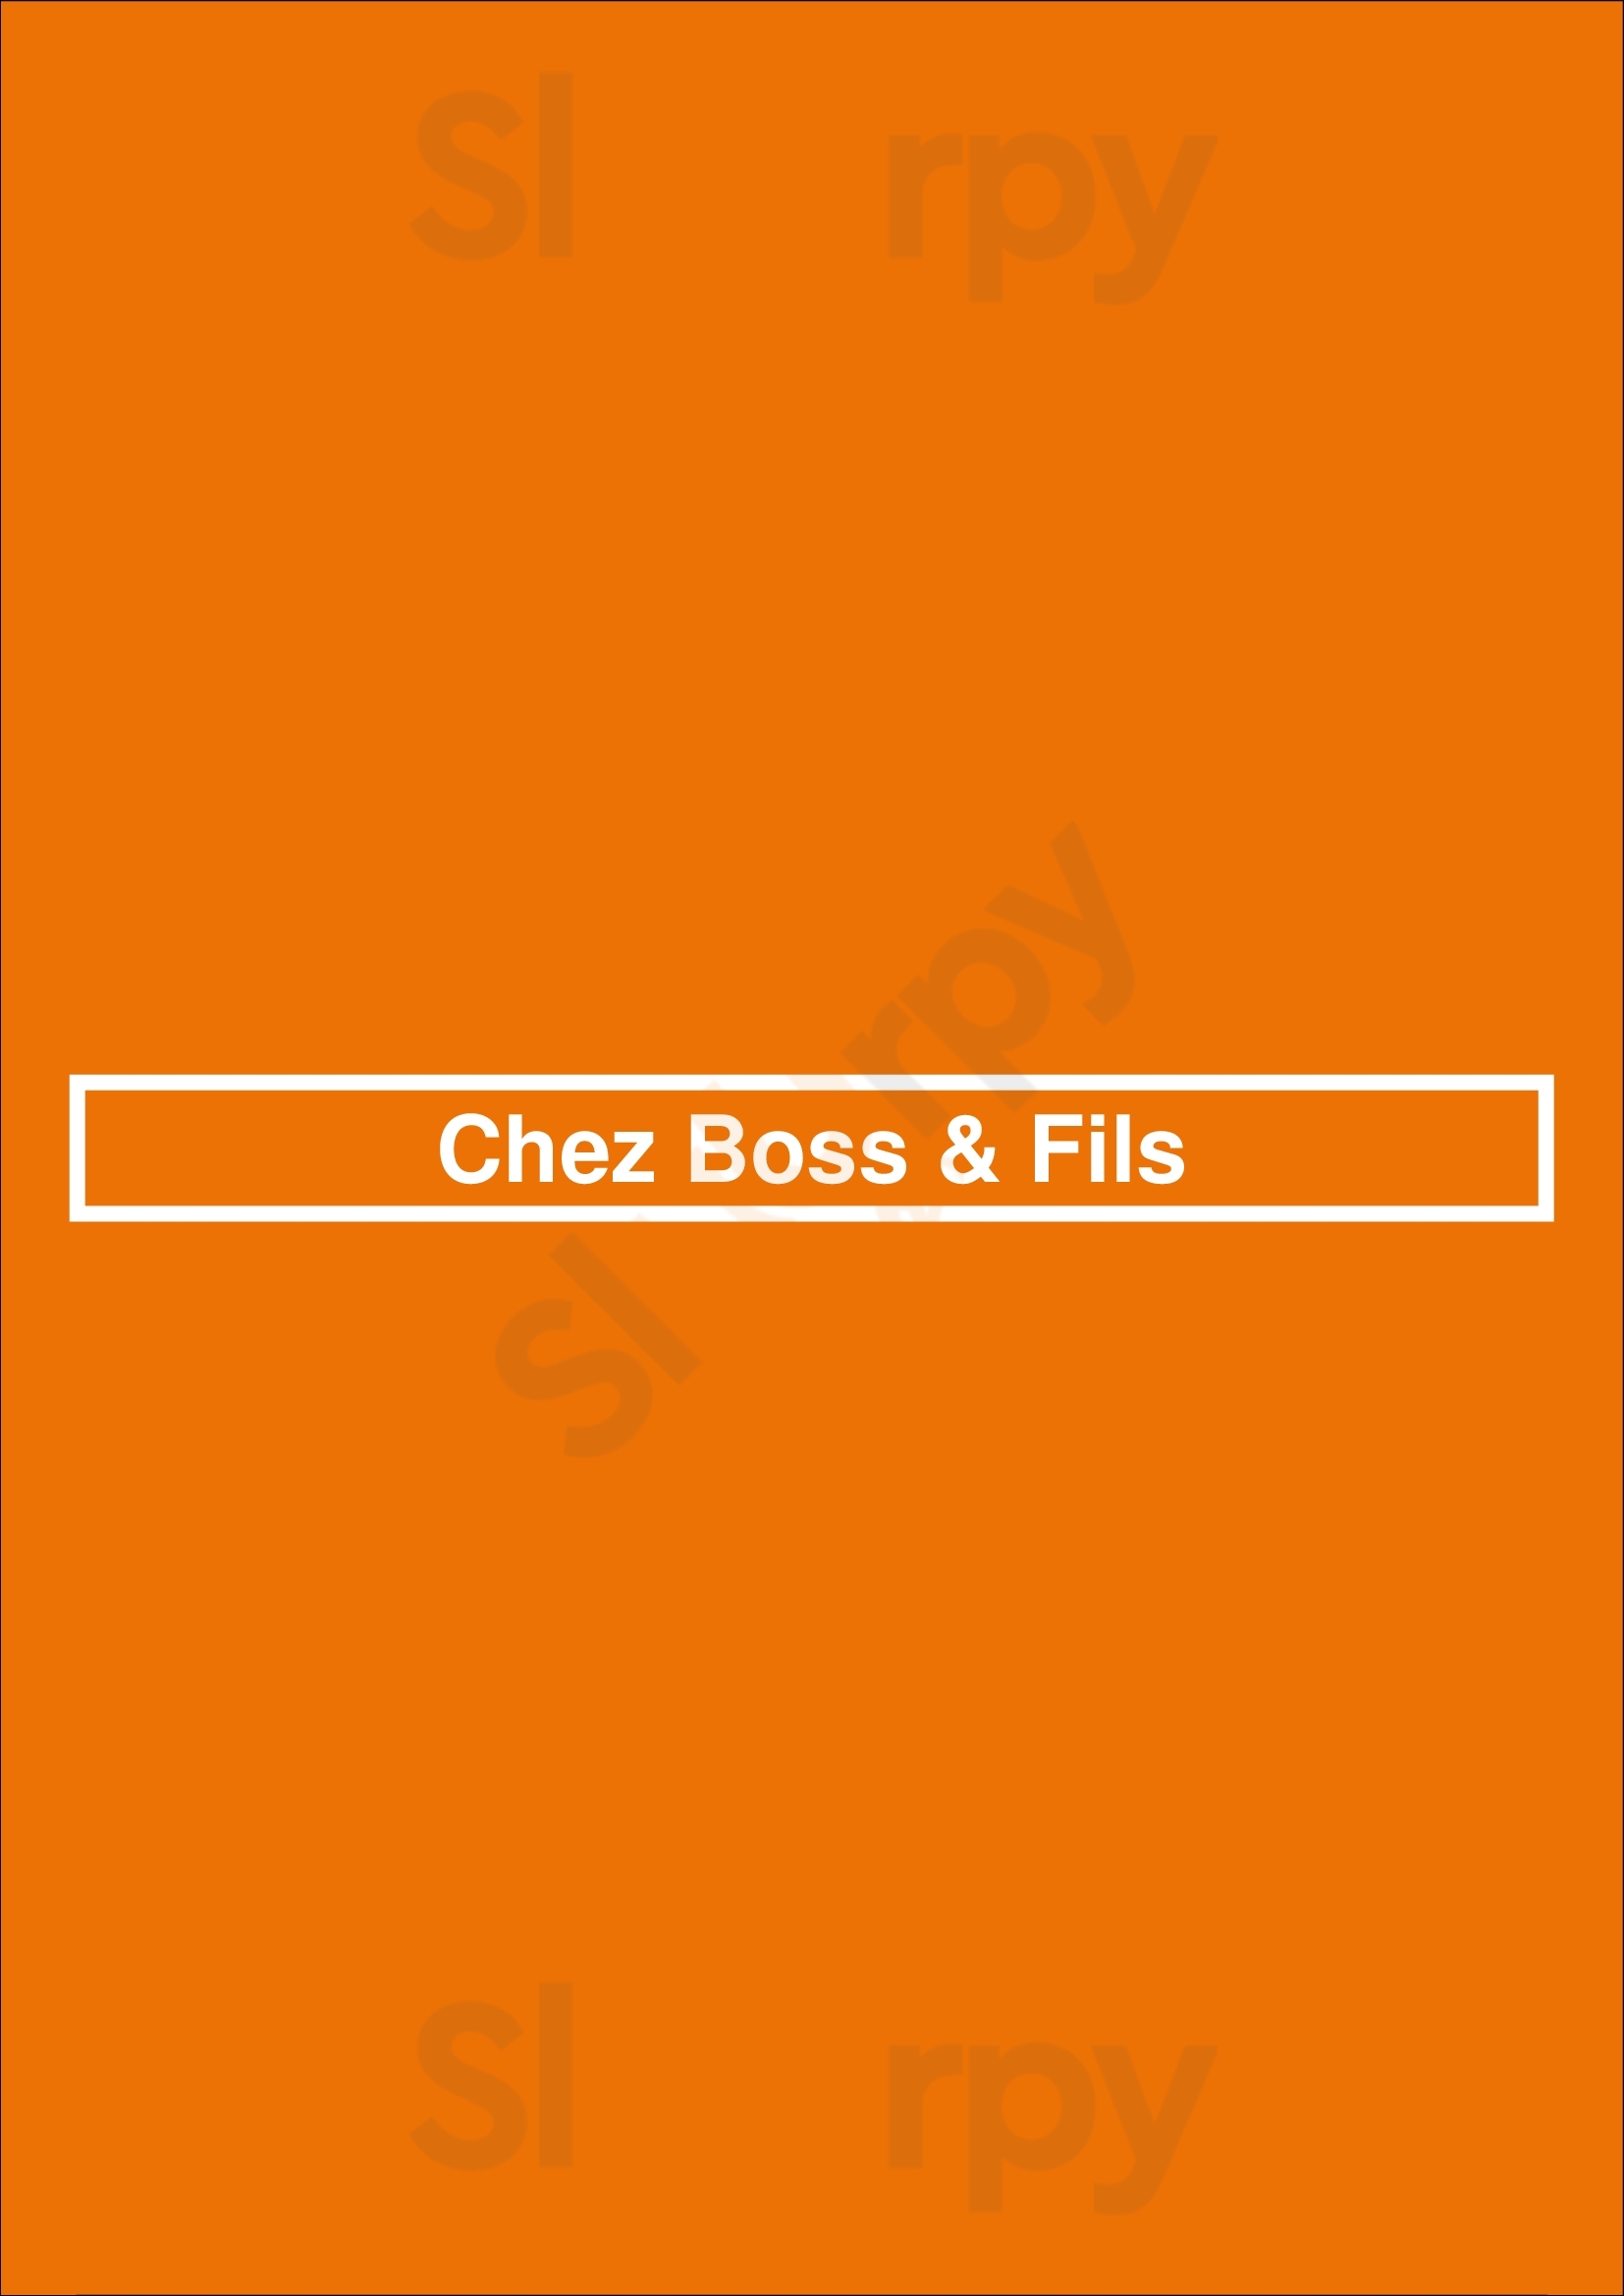 Chez Boss & Fils Montreal Menu - 1